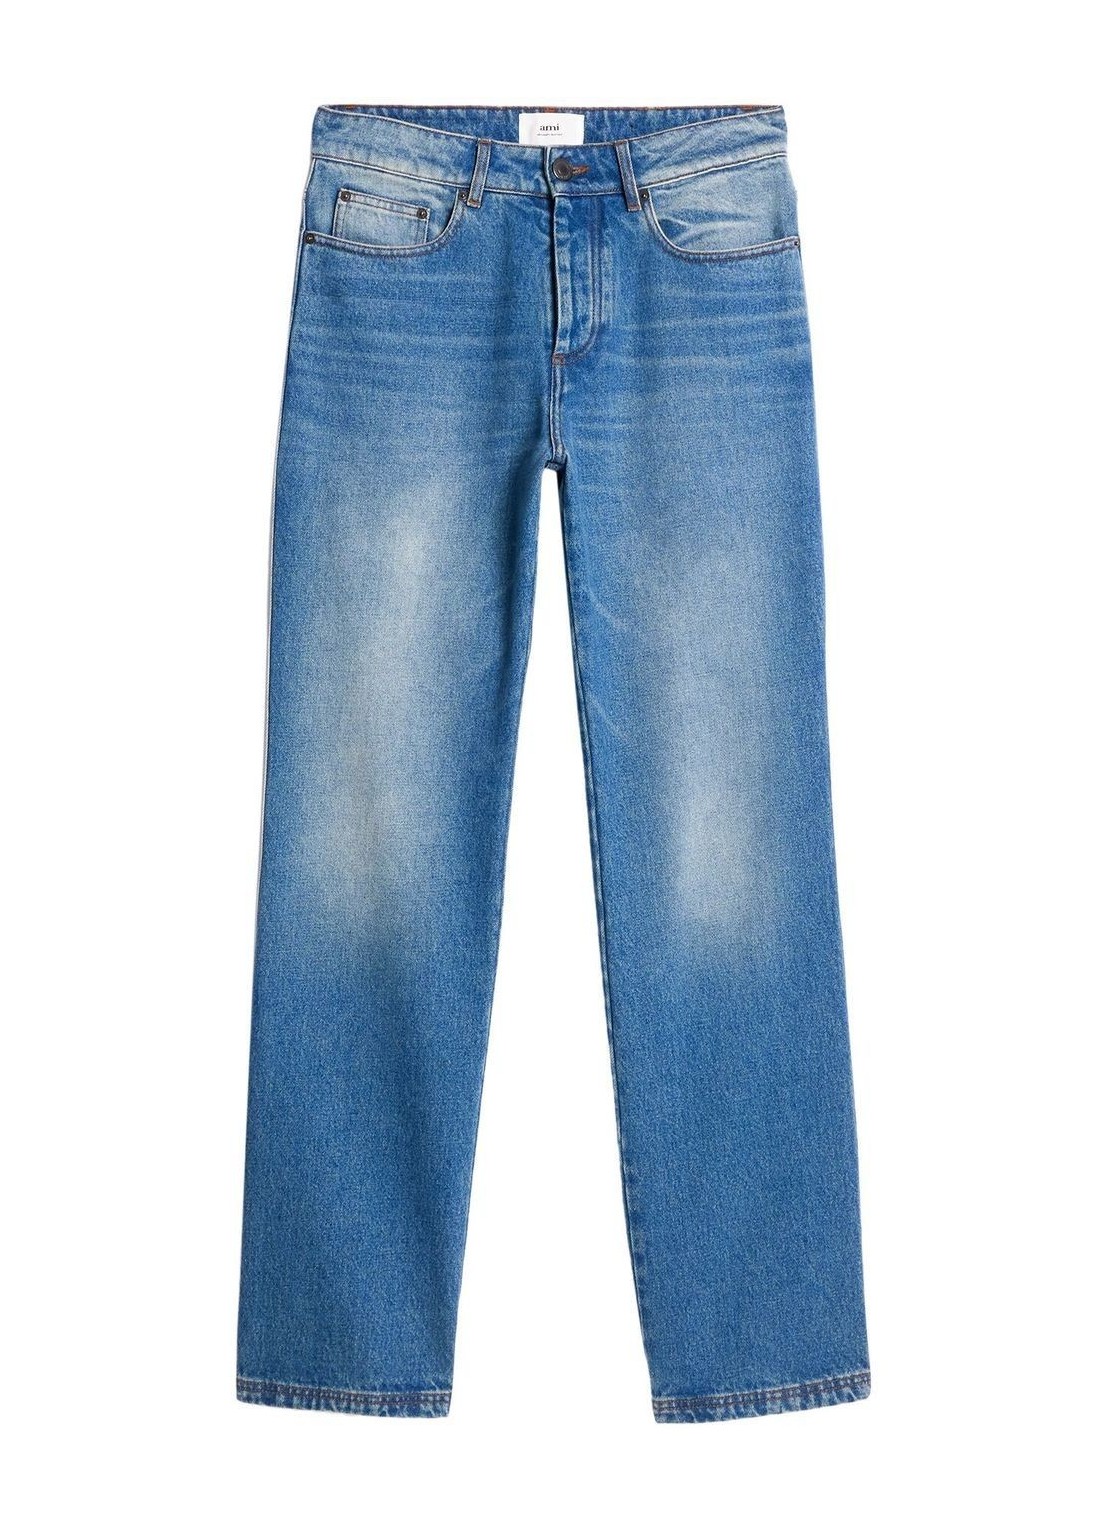 Pantalon jeans ami denim man straight fit jean htr500de0001 480 talla Azul
 